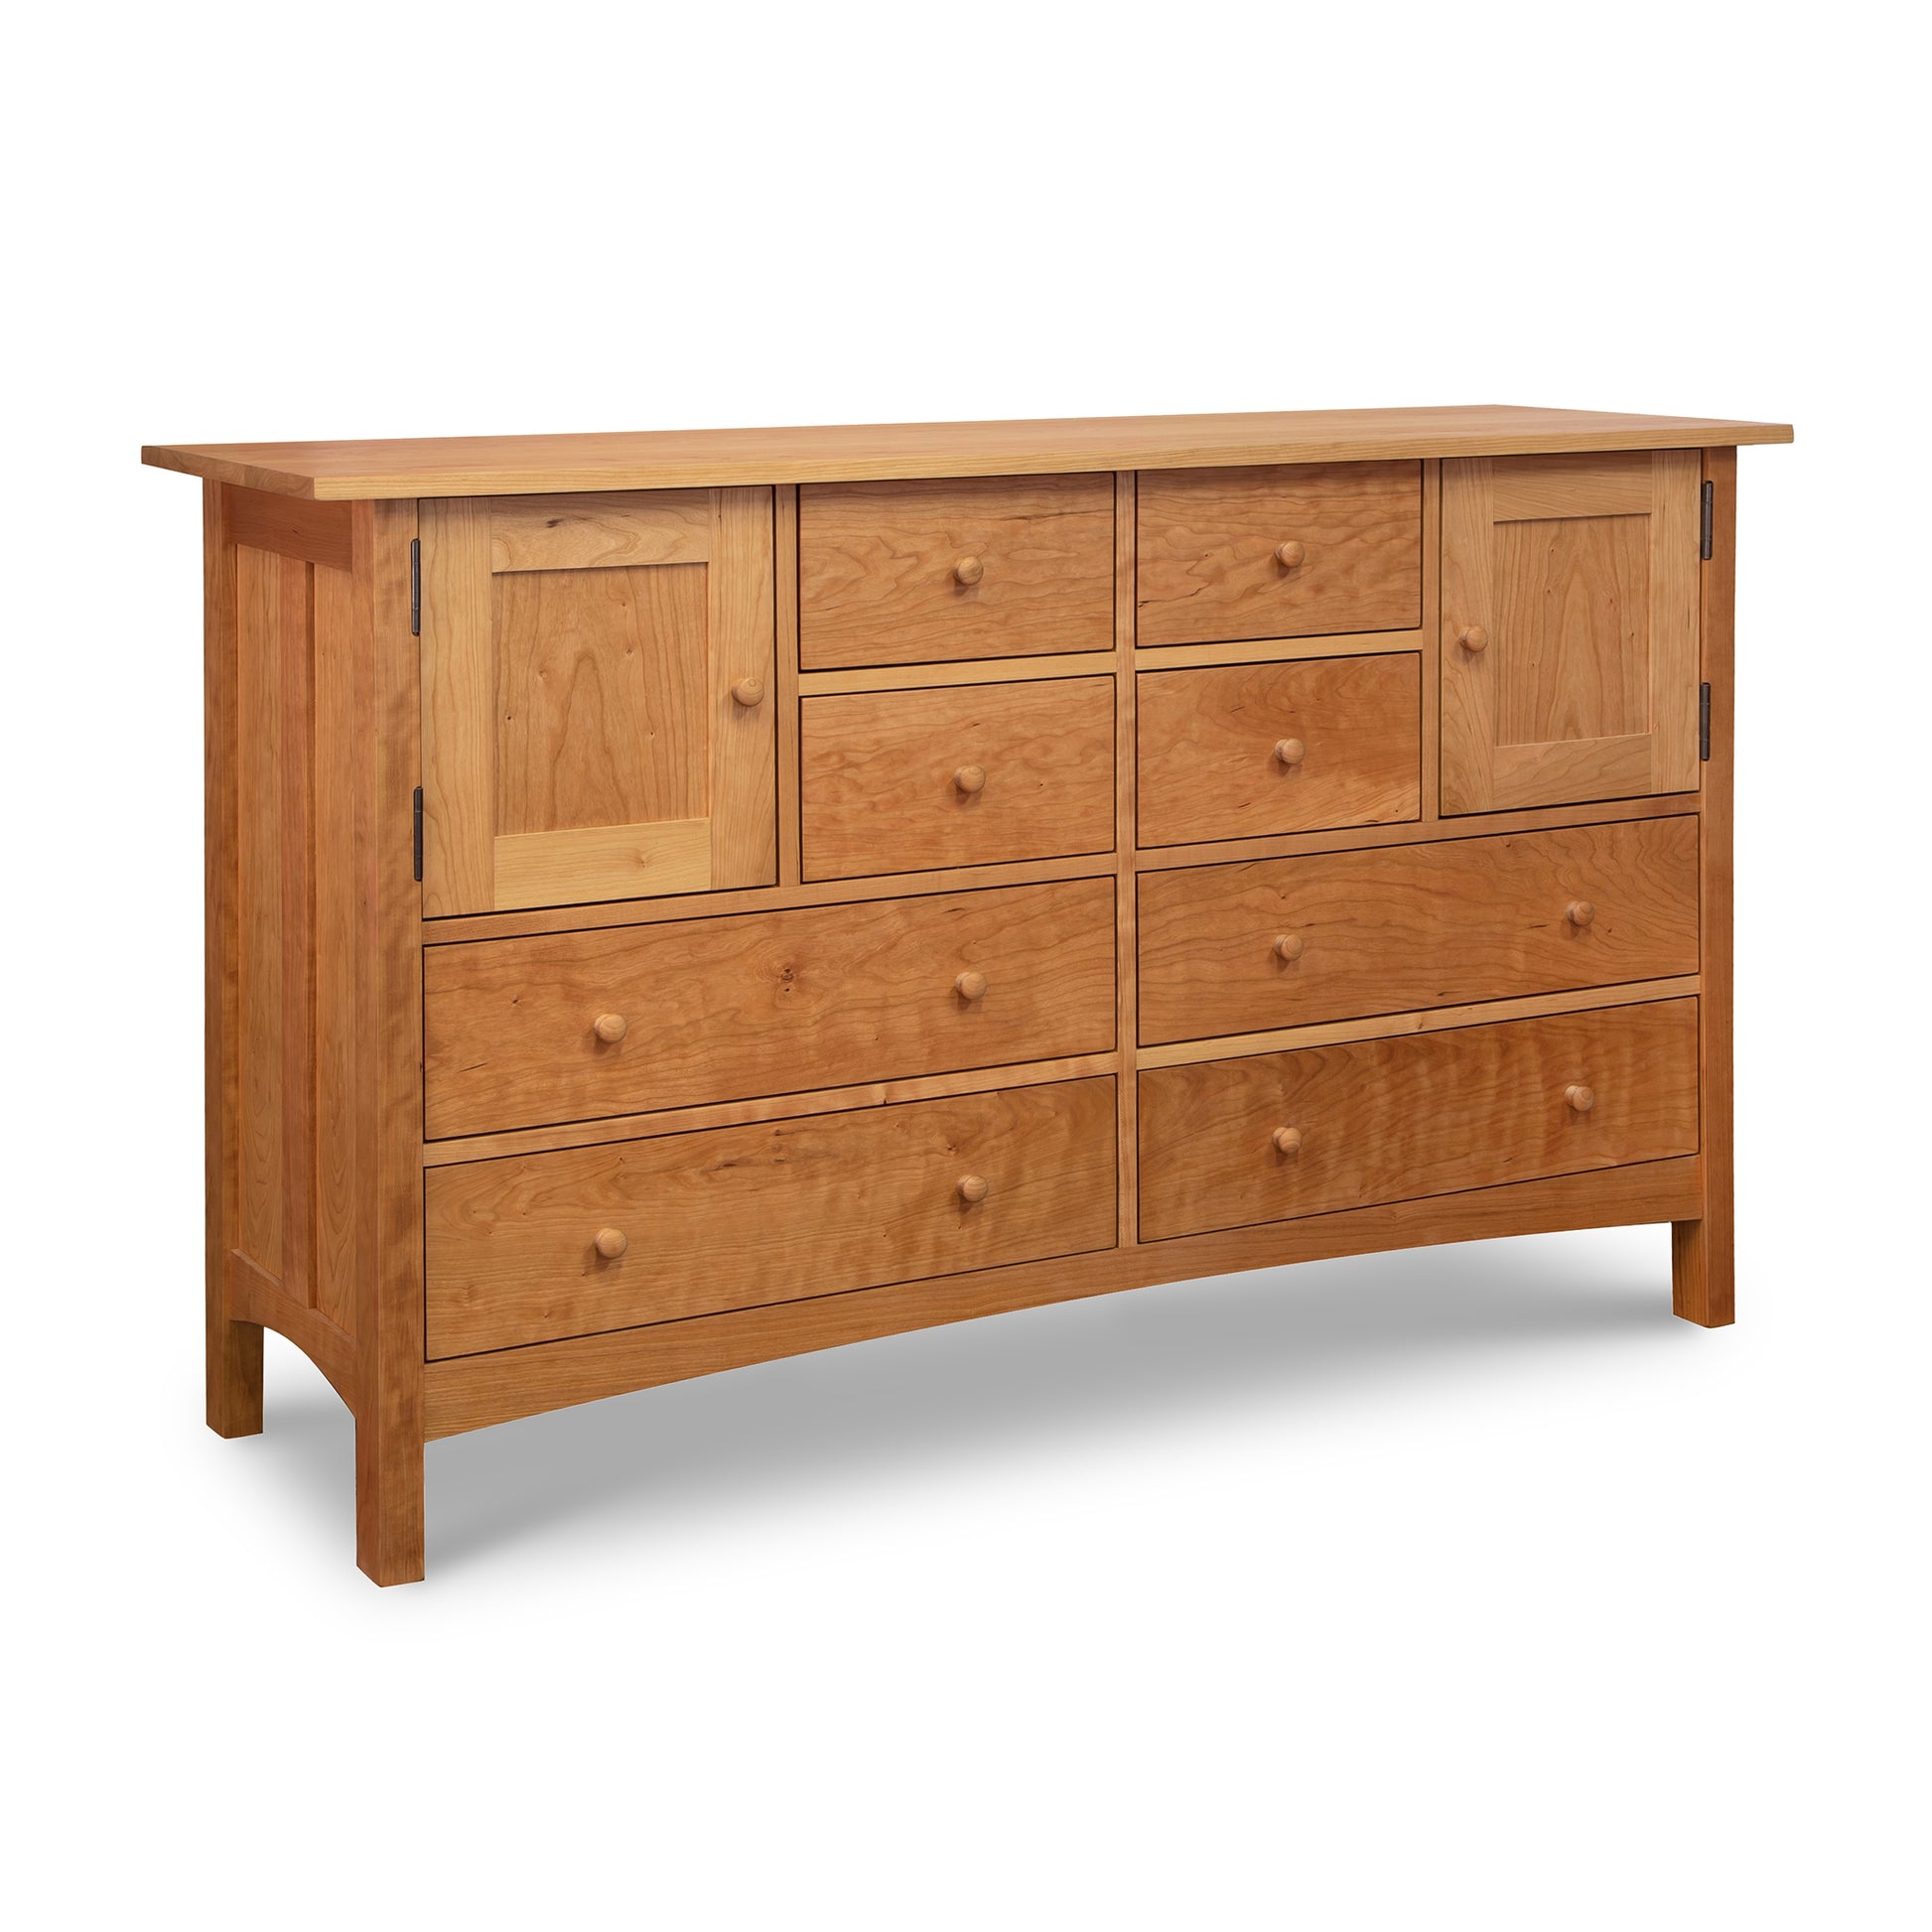 A Vermont Furniture Designs Burlington Shaker 8-Drawer 2-Door Dresser with drawers on it.